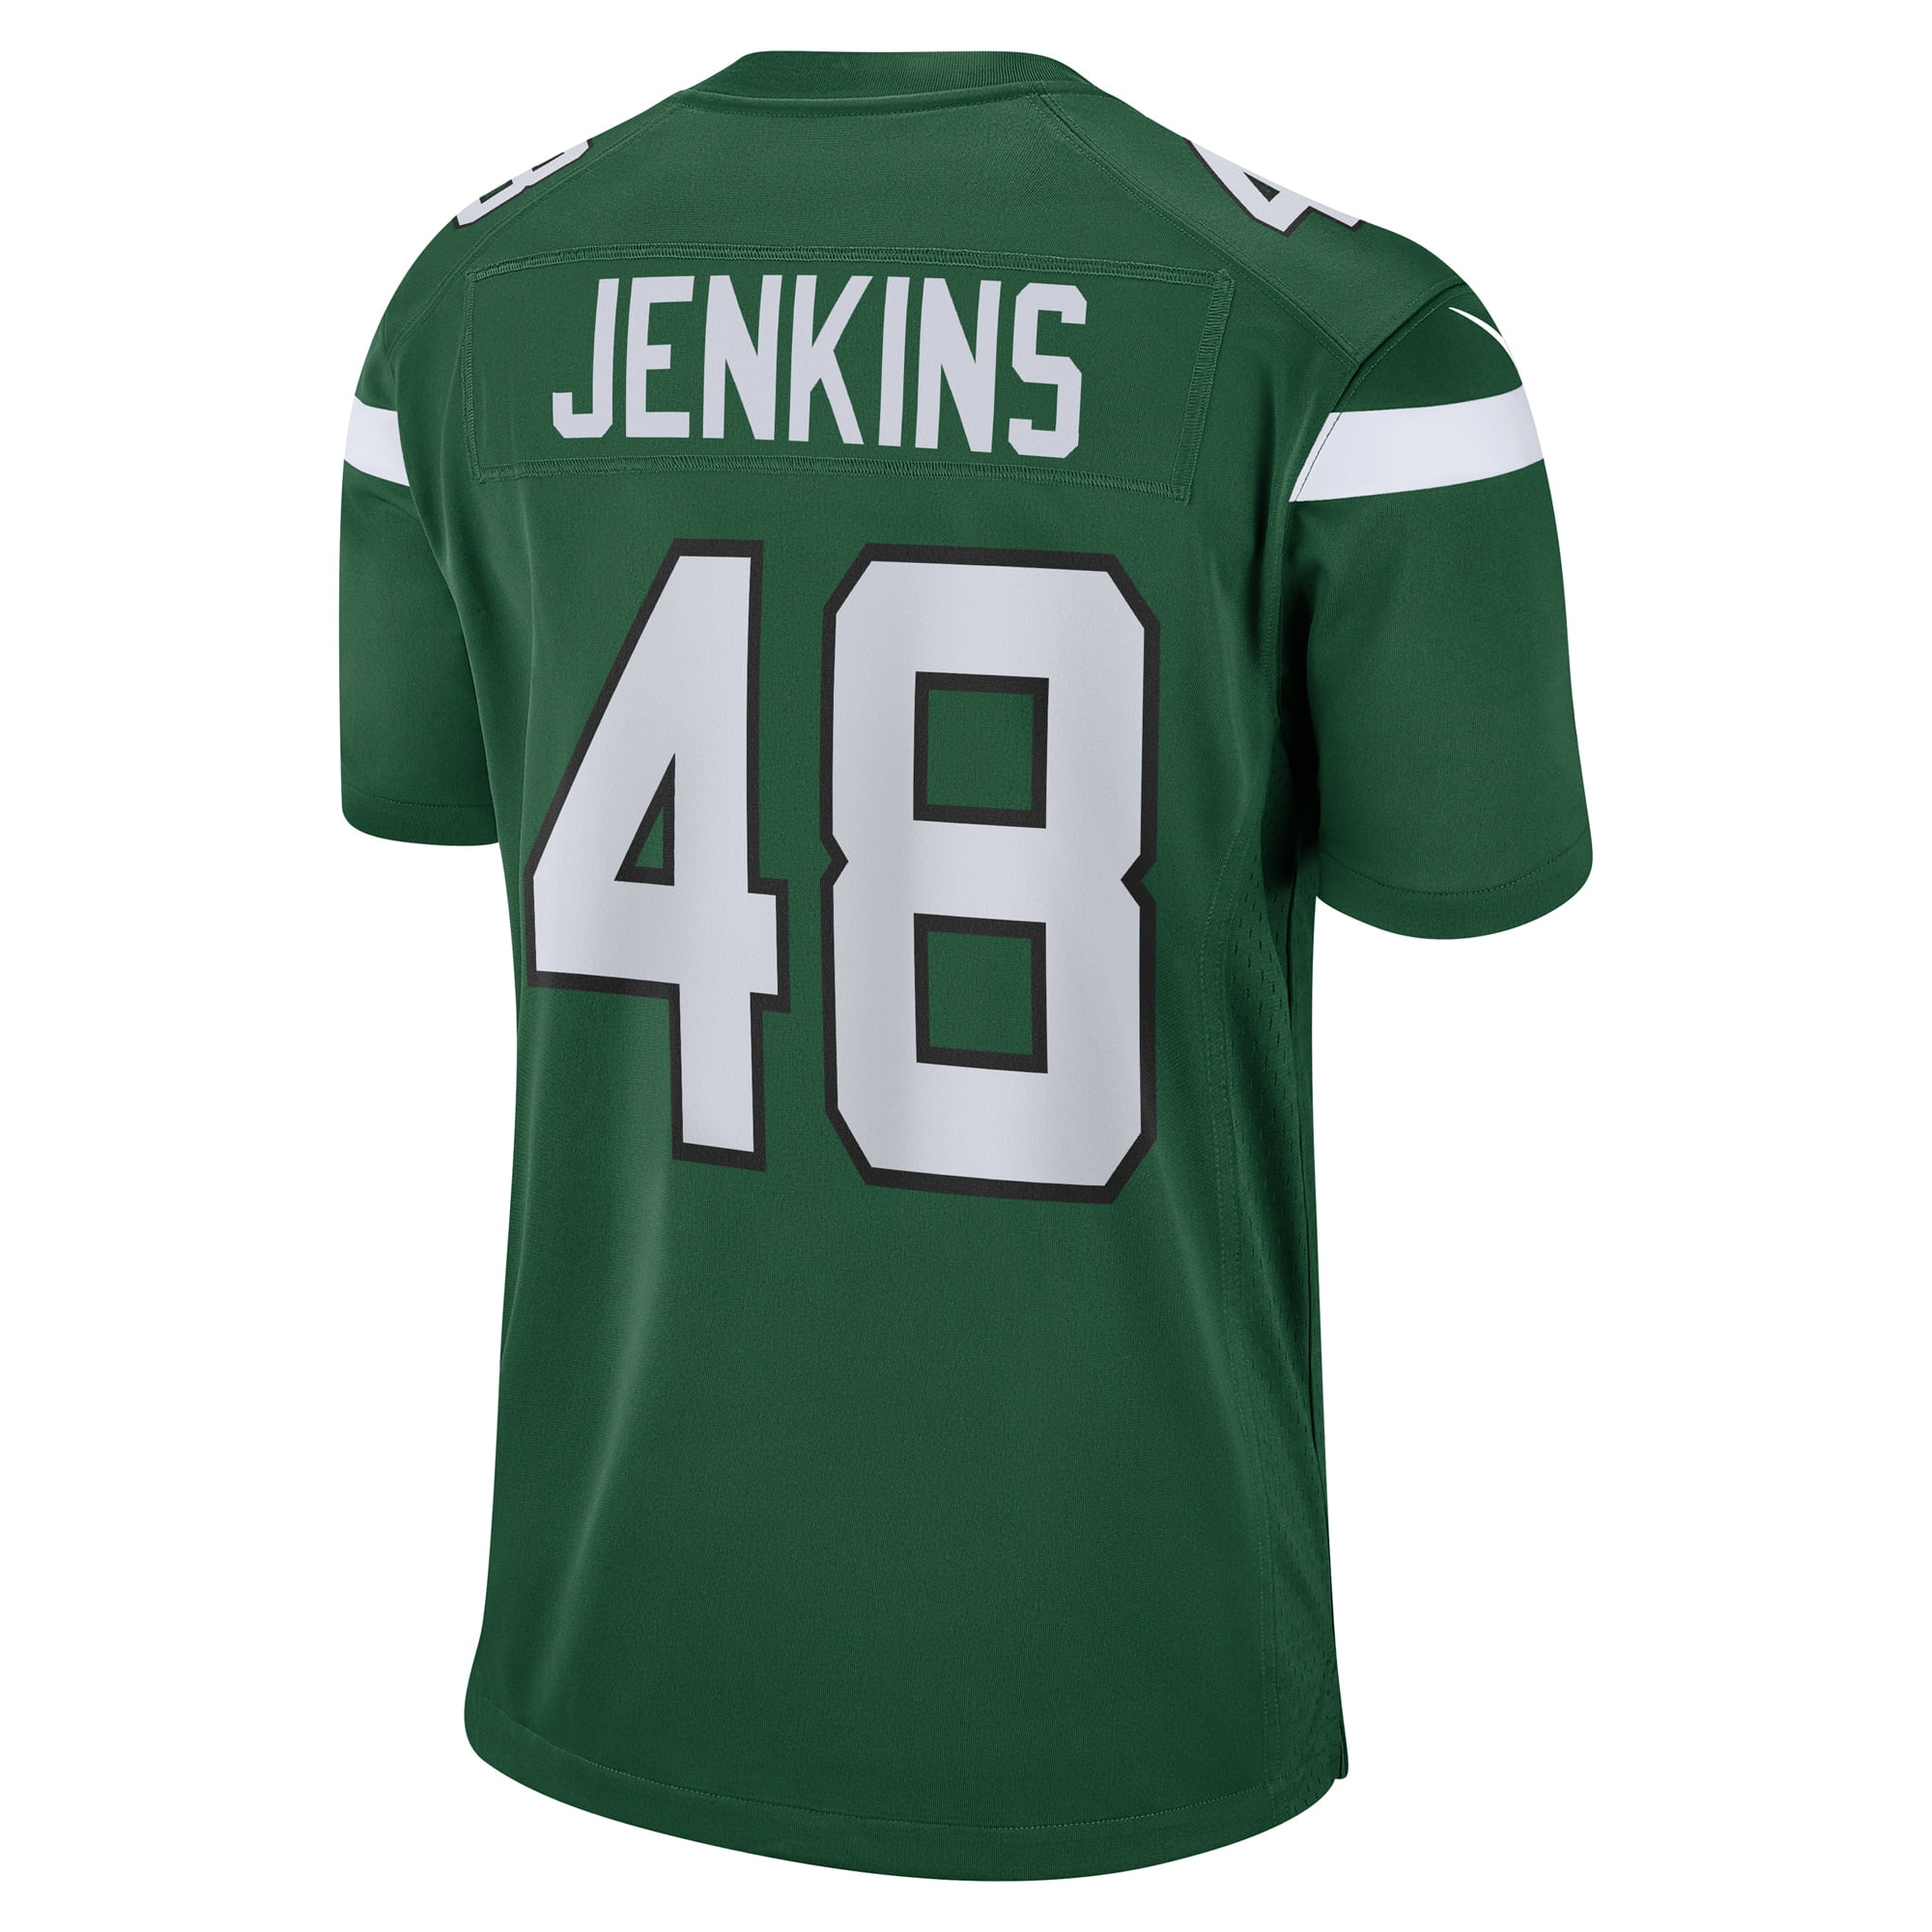 Jordan Jenkins New York Jets Nike Game Jersey - Gotham Green